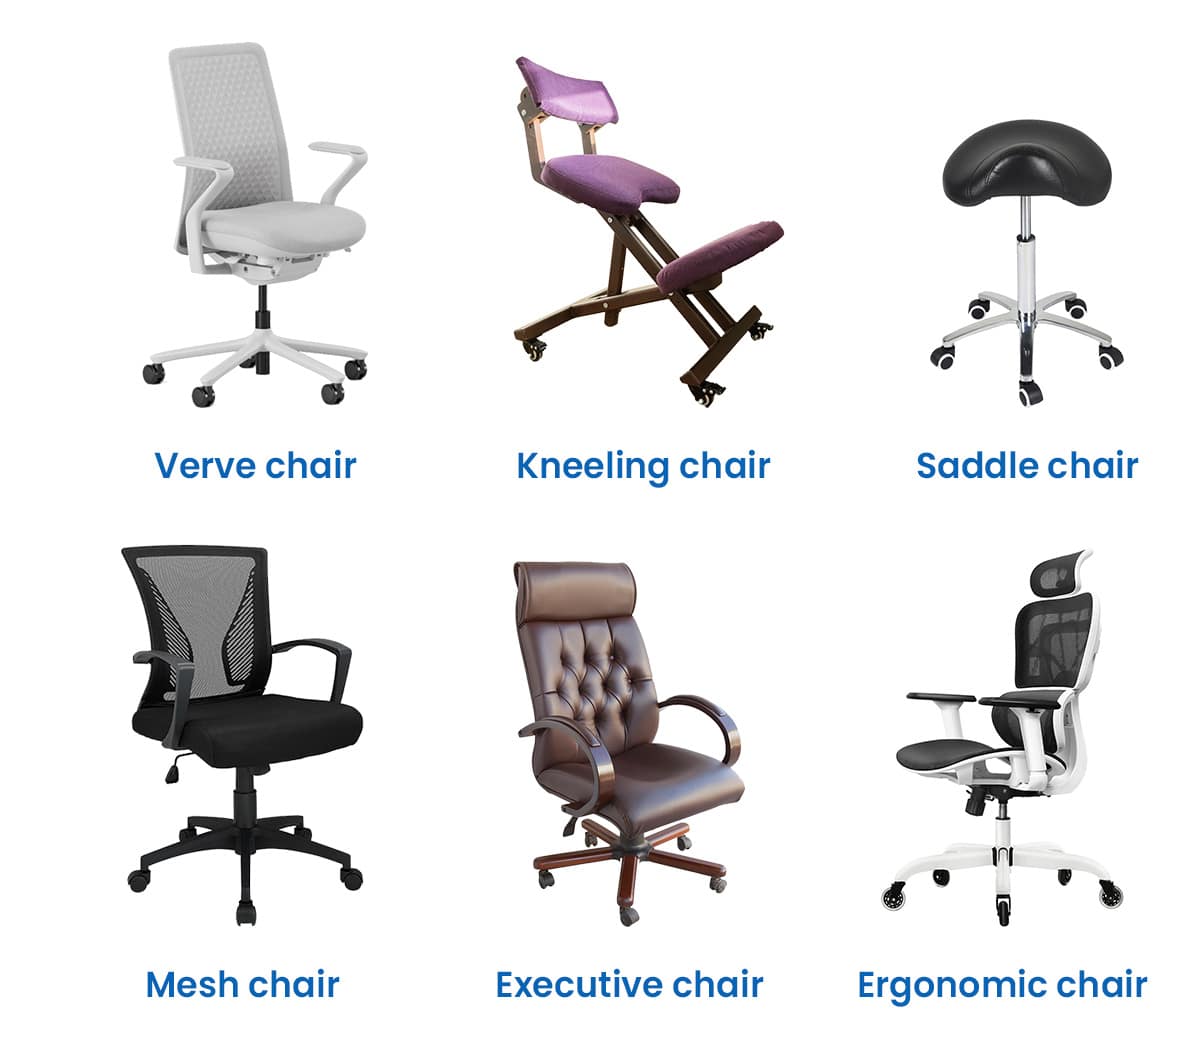 Types of ergonomic office chair